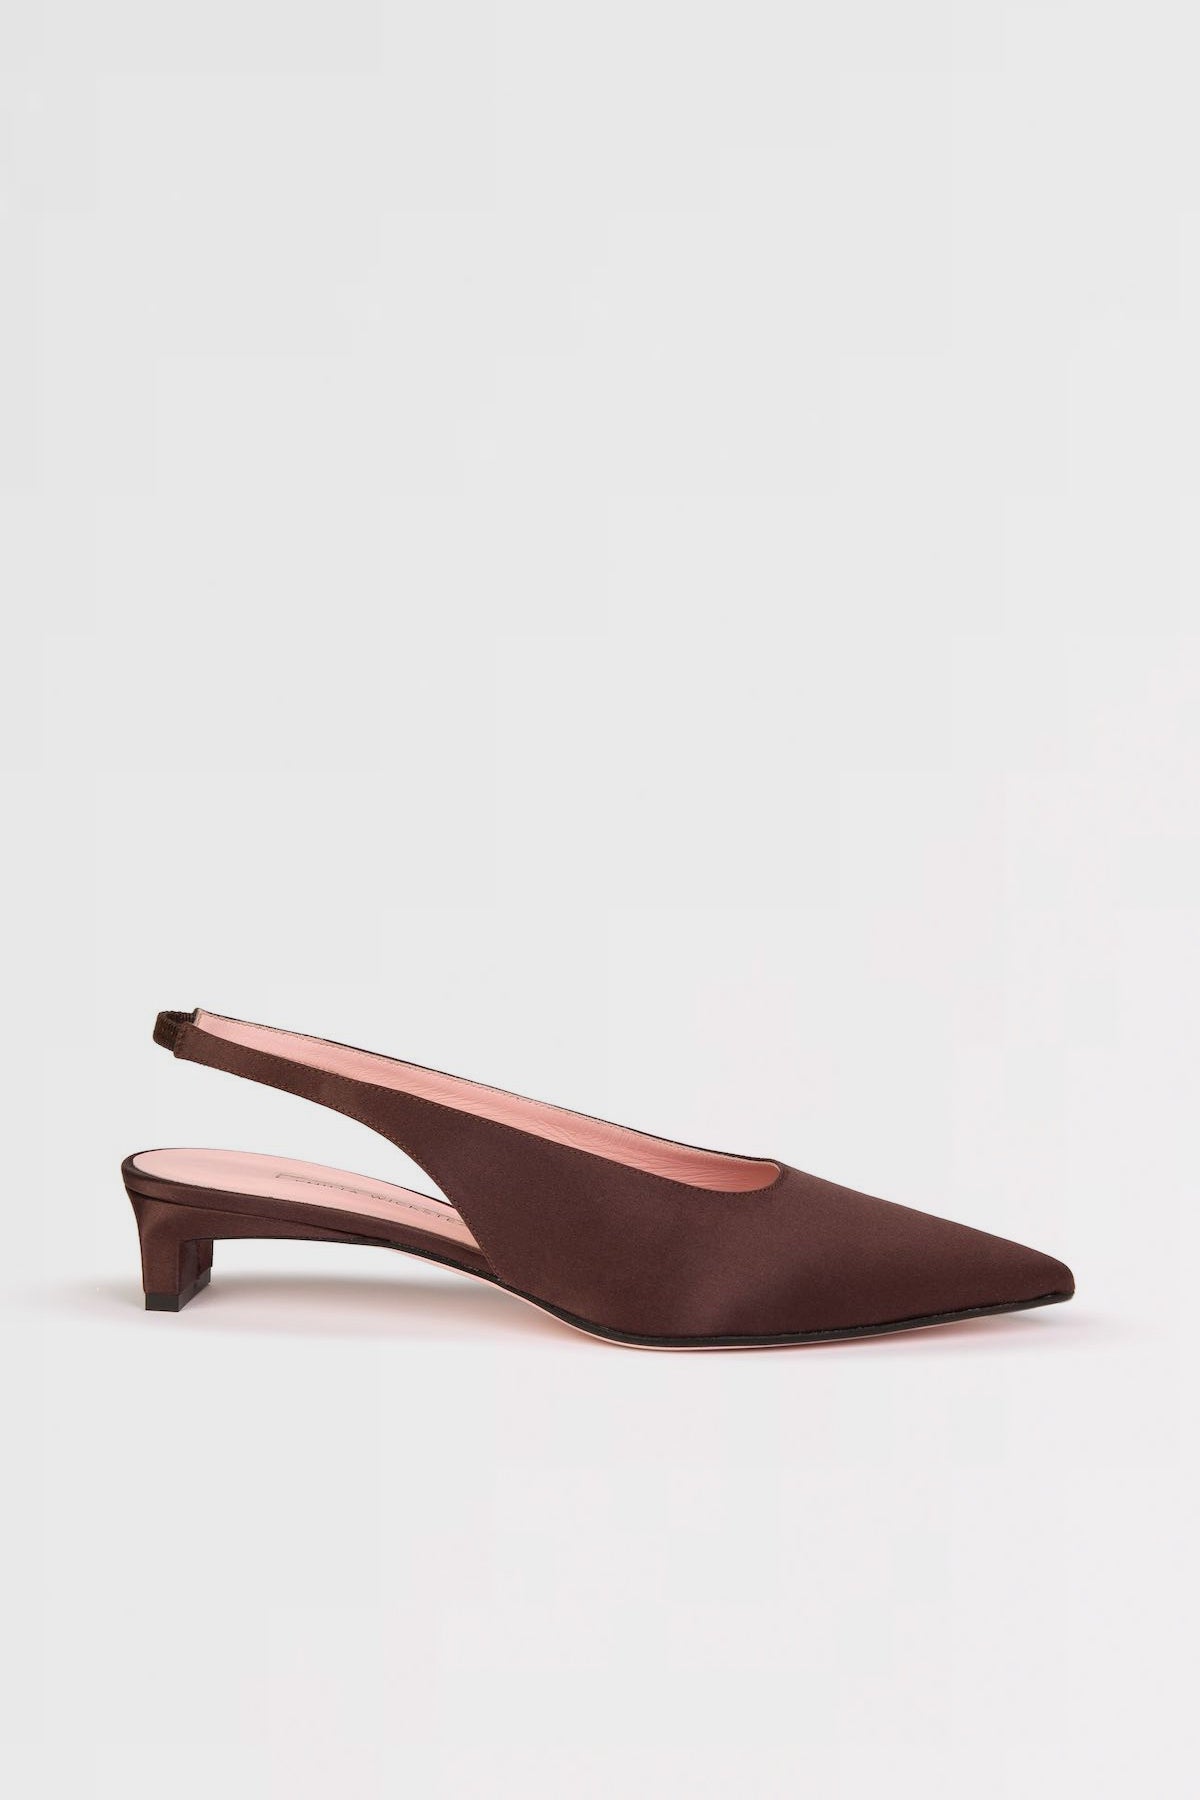 Margarita Kitten Heels | Chocolate Satin Sling-Back Kitten Heel Shoes | Emilia Wickstead